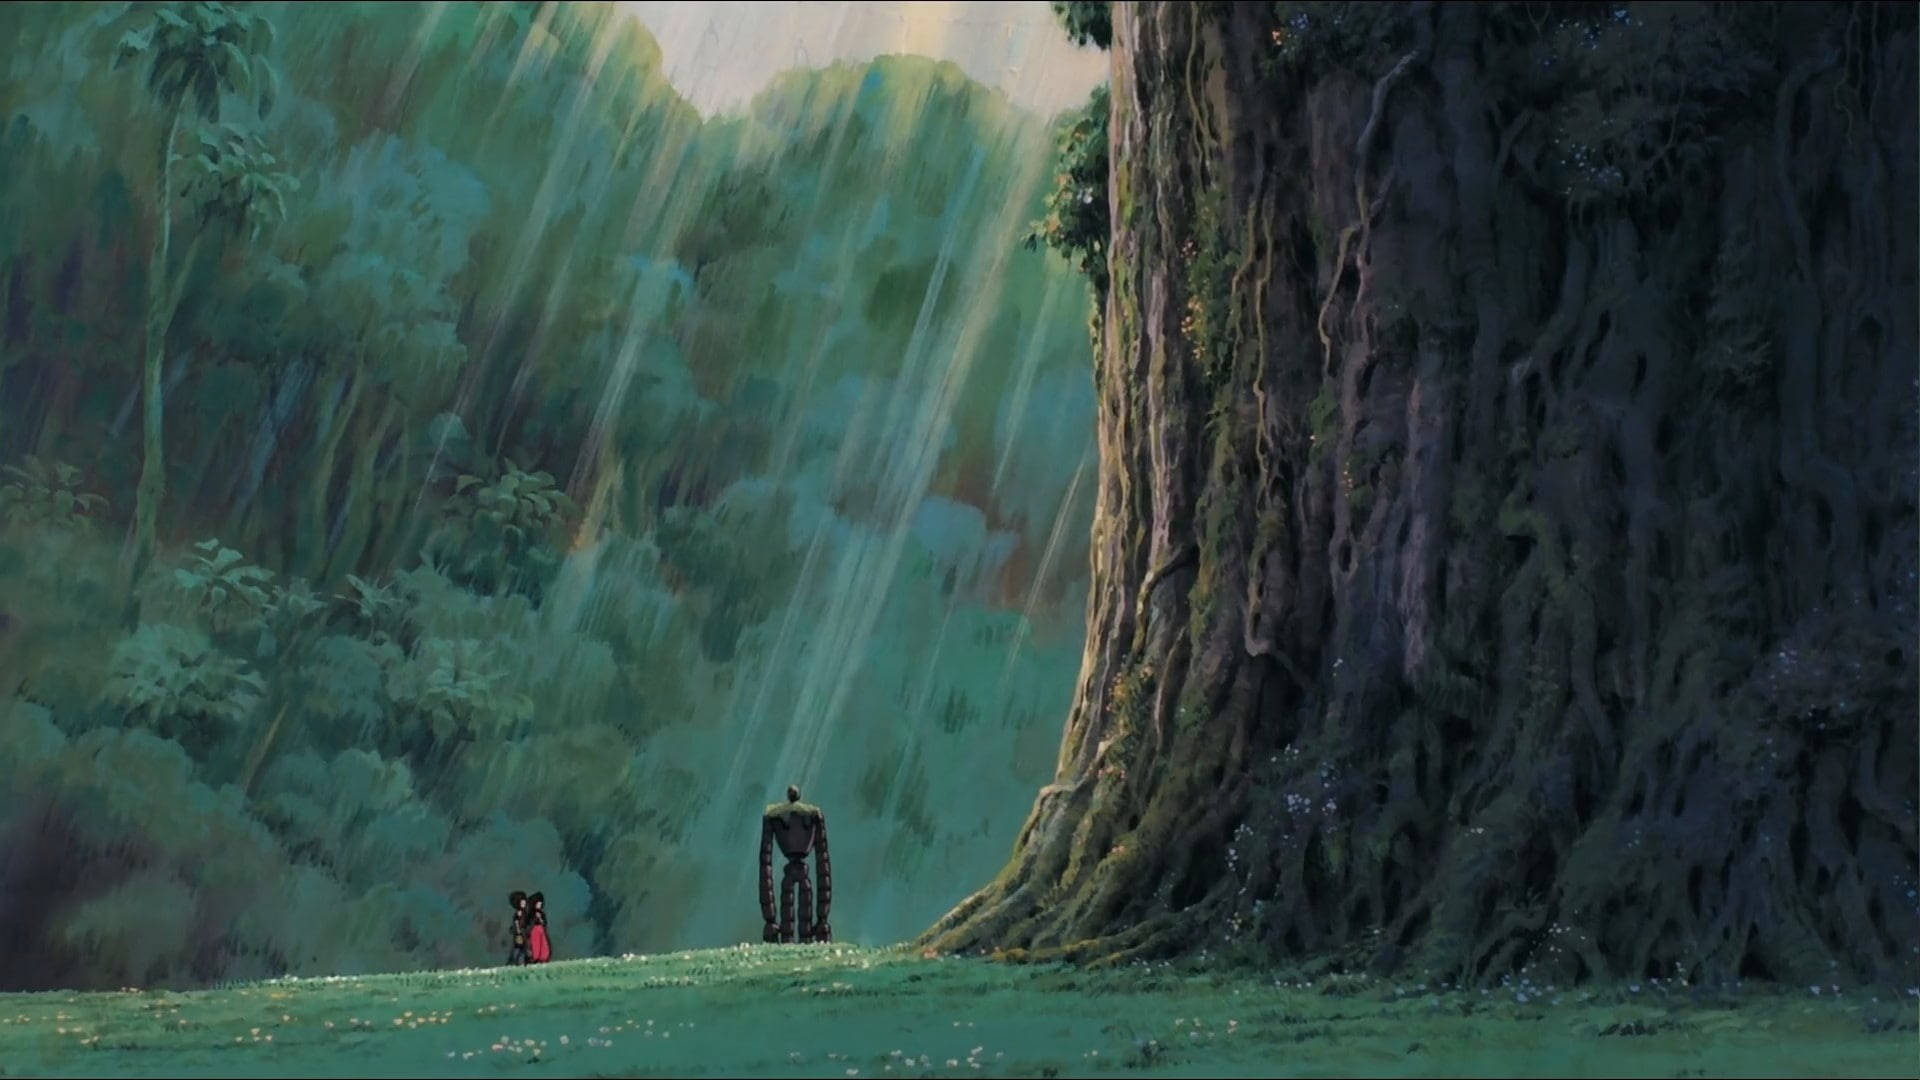 Studio Ghibli Scenery Robot In Forest Wallpaper